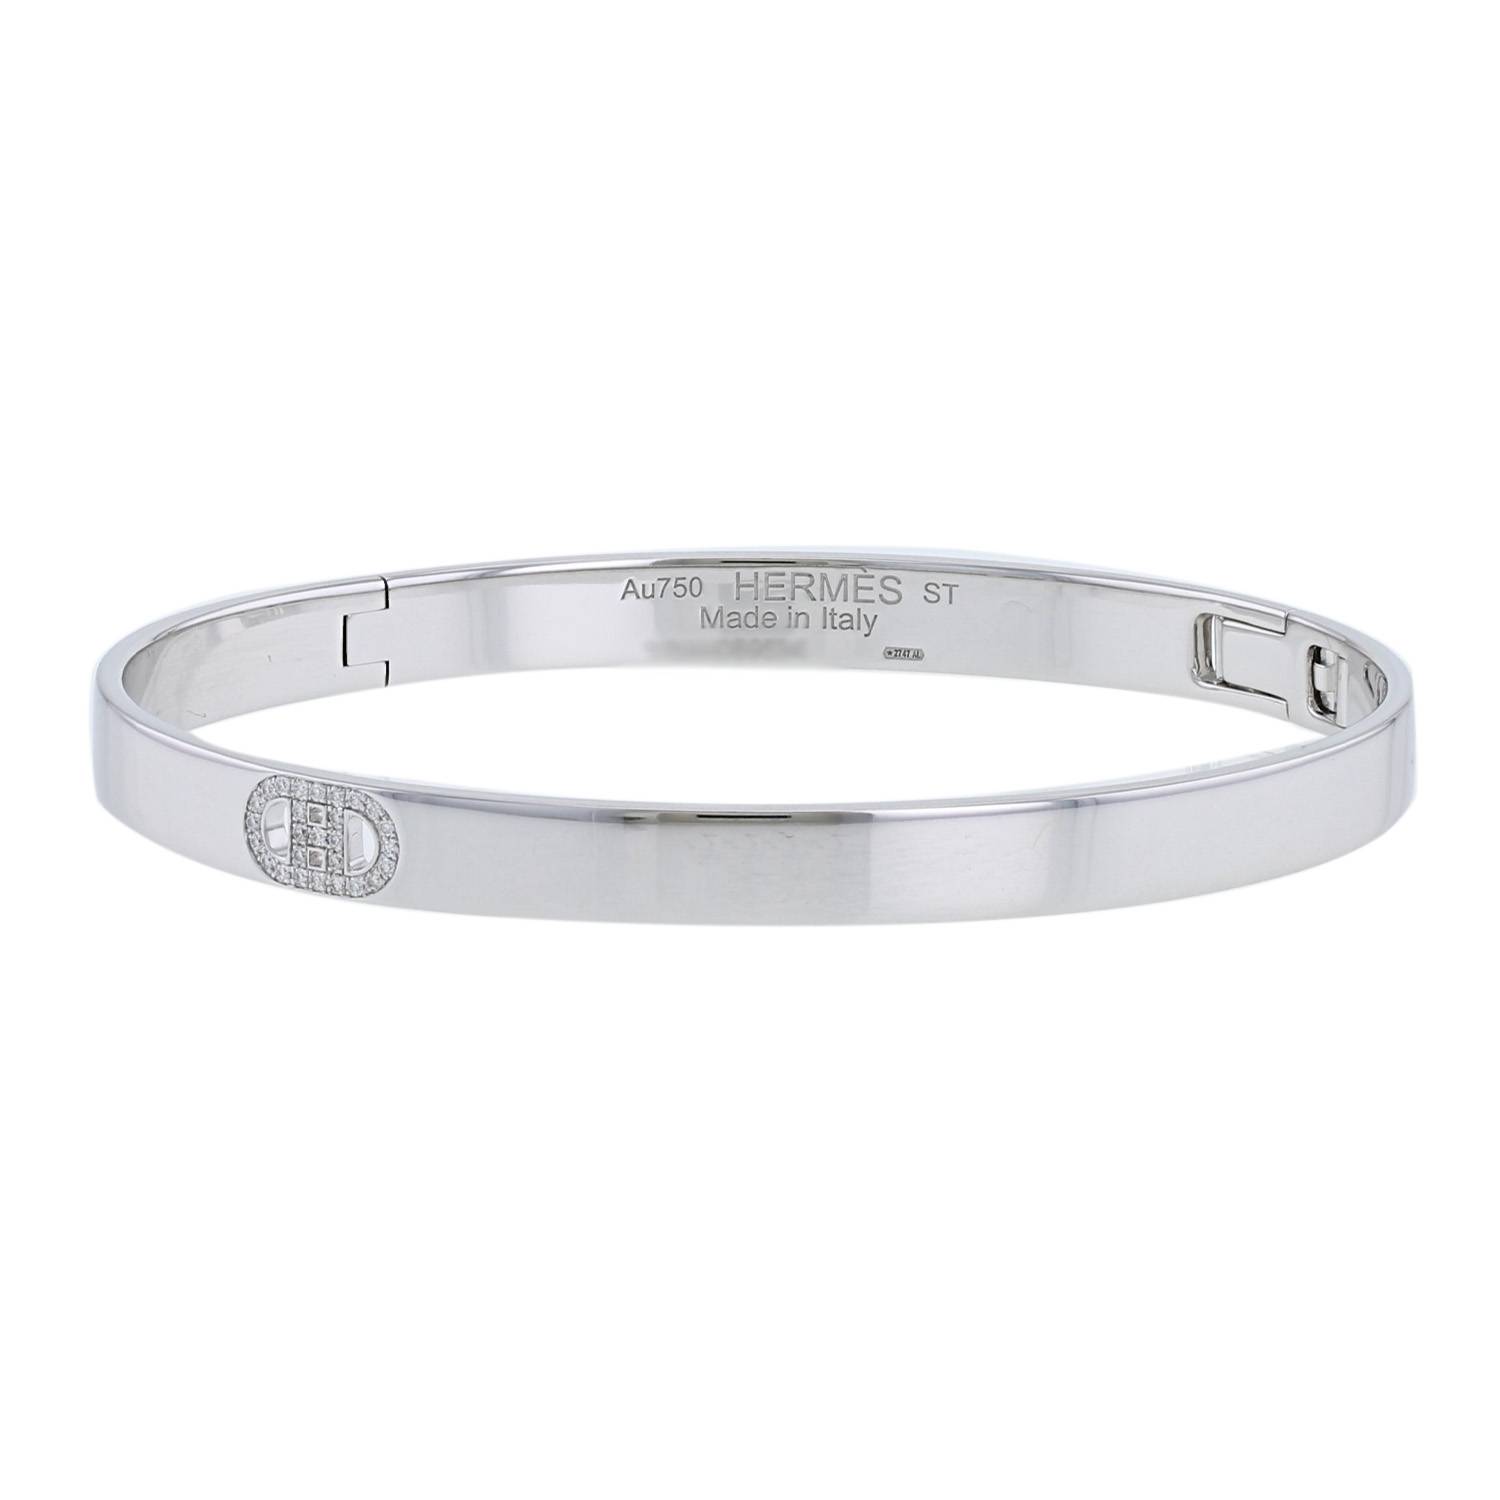 Clic H bracelet | Hermès USA | Hermes jewelry, Enamel bracelet, Hermes  bracelet